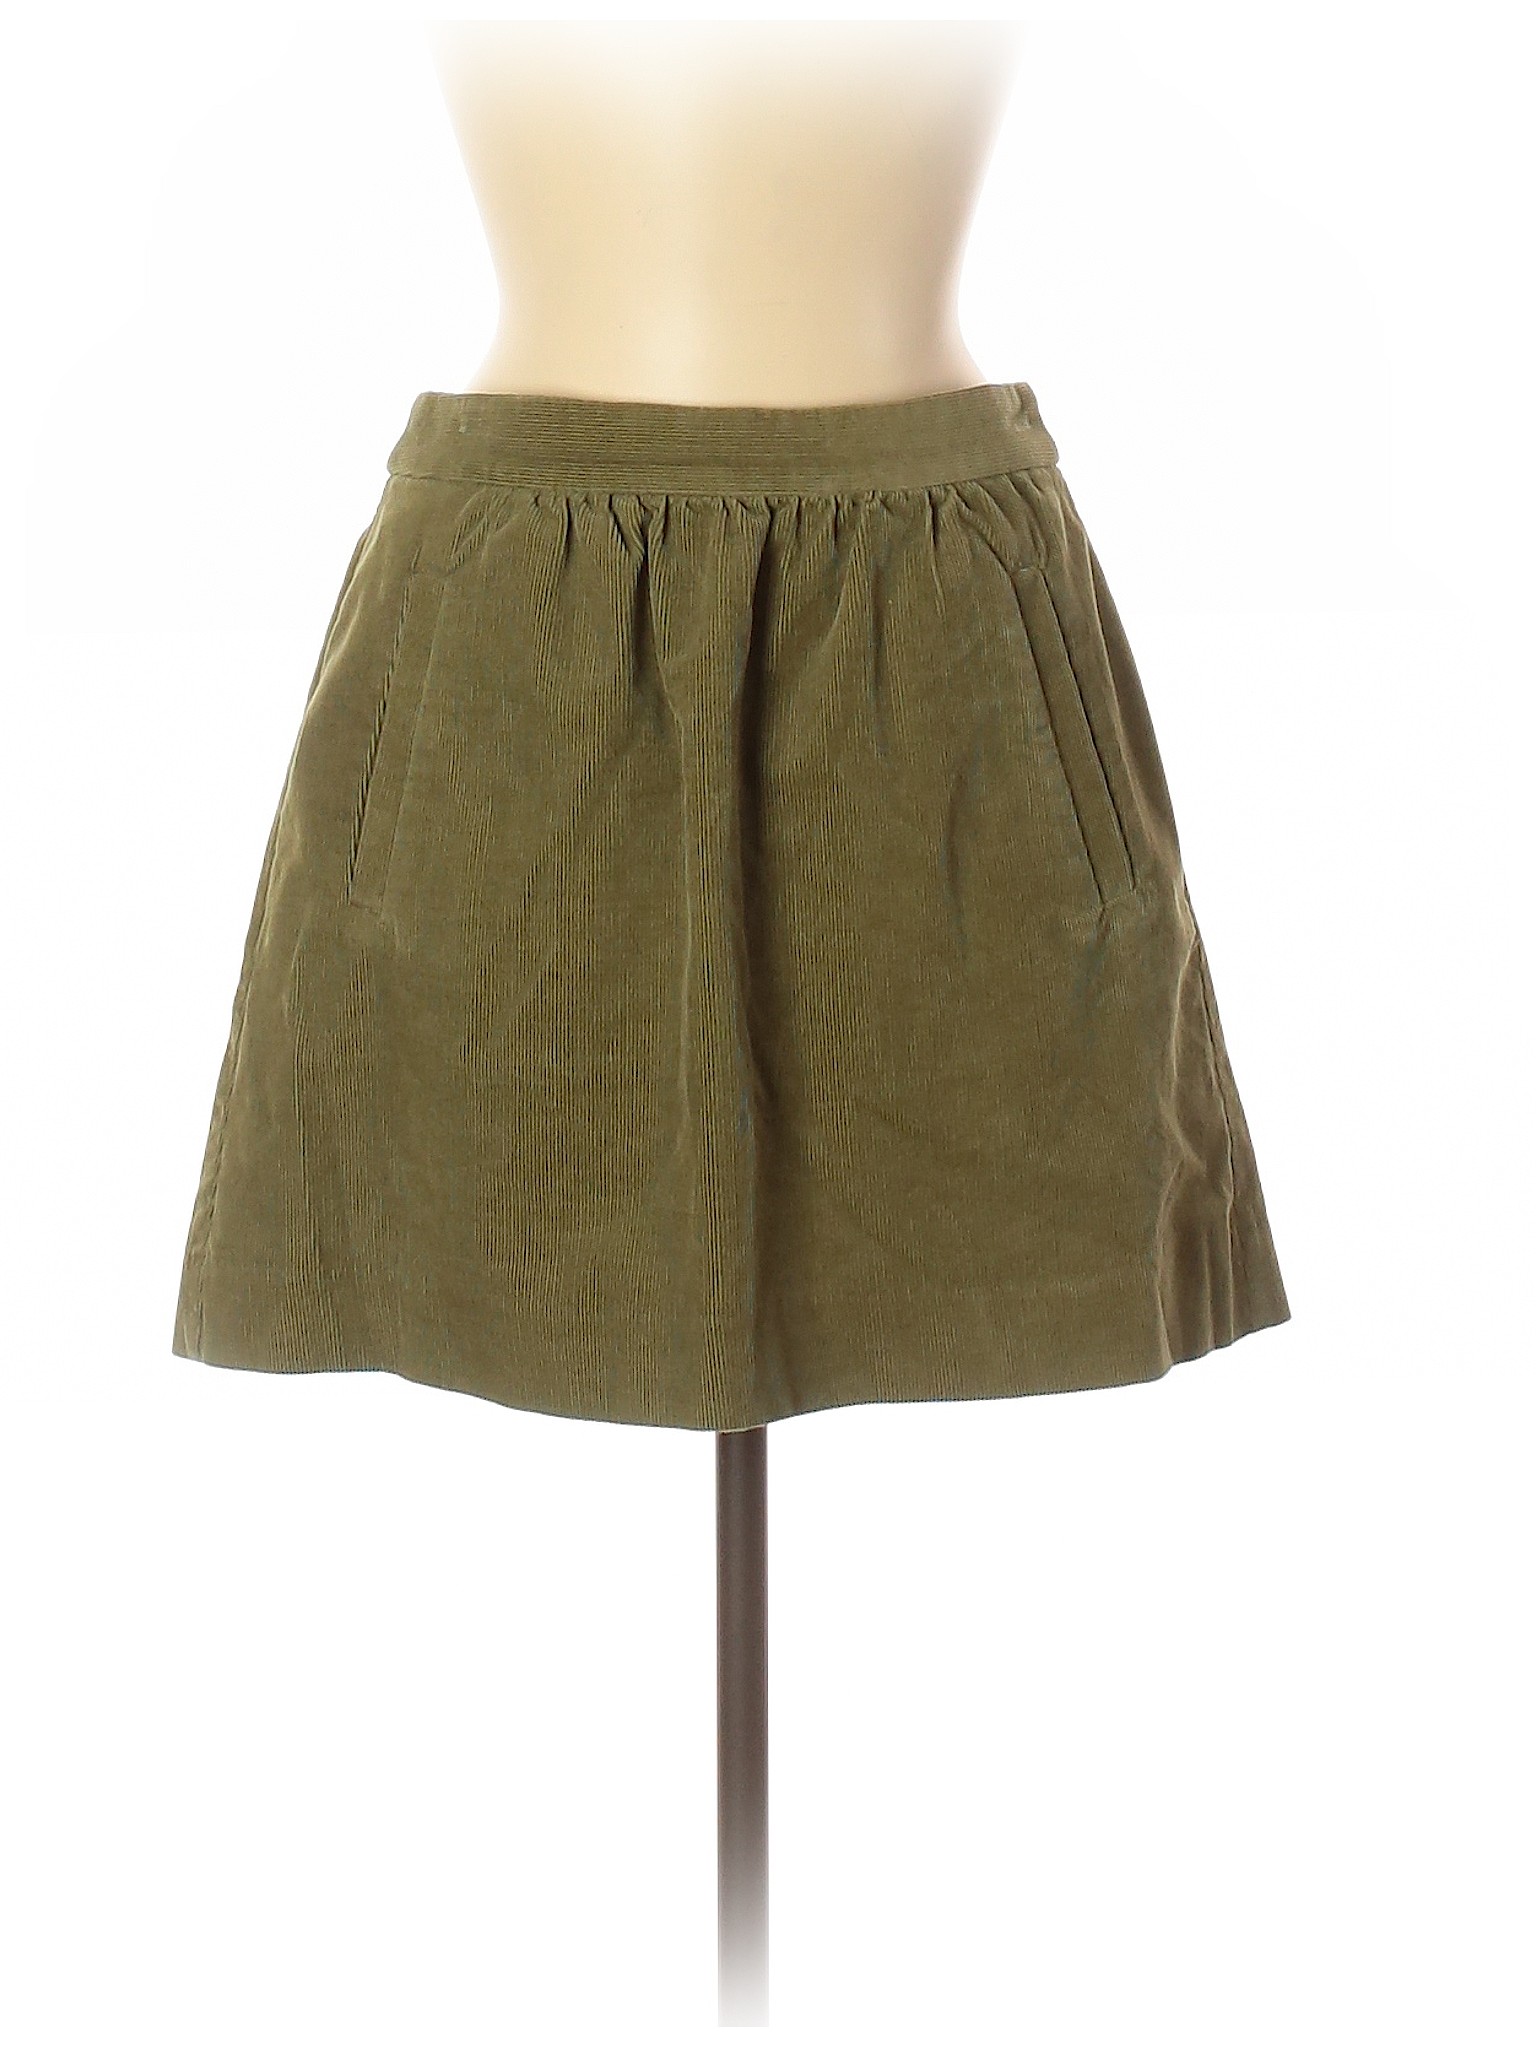 J.Crew Women Green Casual Skirt 4 | eBay